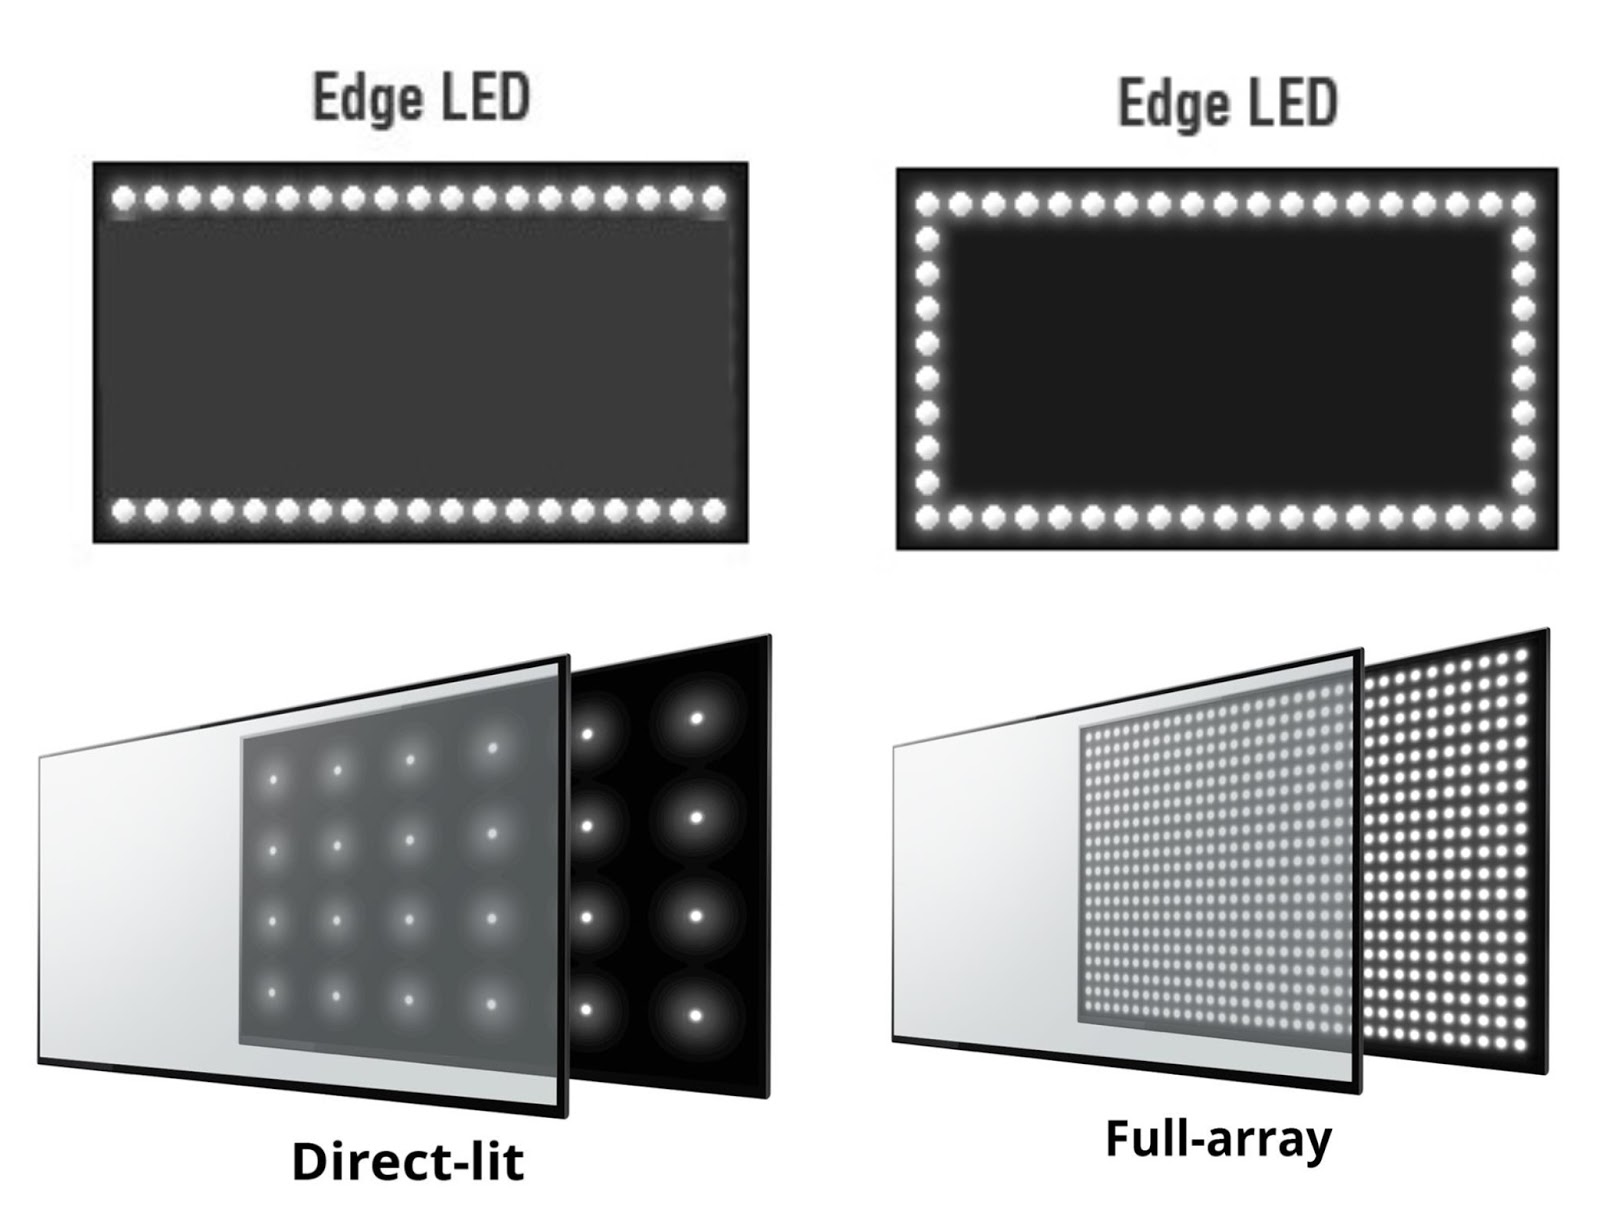 Edge-Lit LCDs VS Direct-lit LCDs | ELED TV VS DLED TV : Which is better? LCD Vs LED?